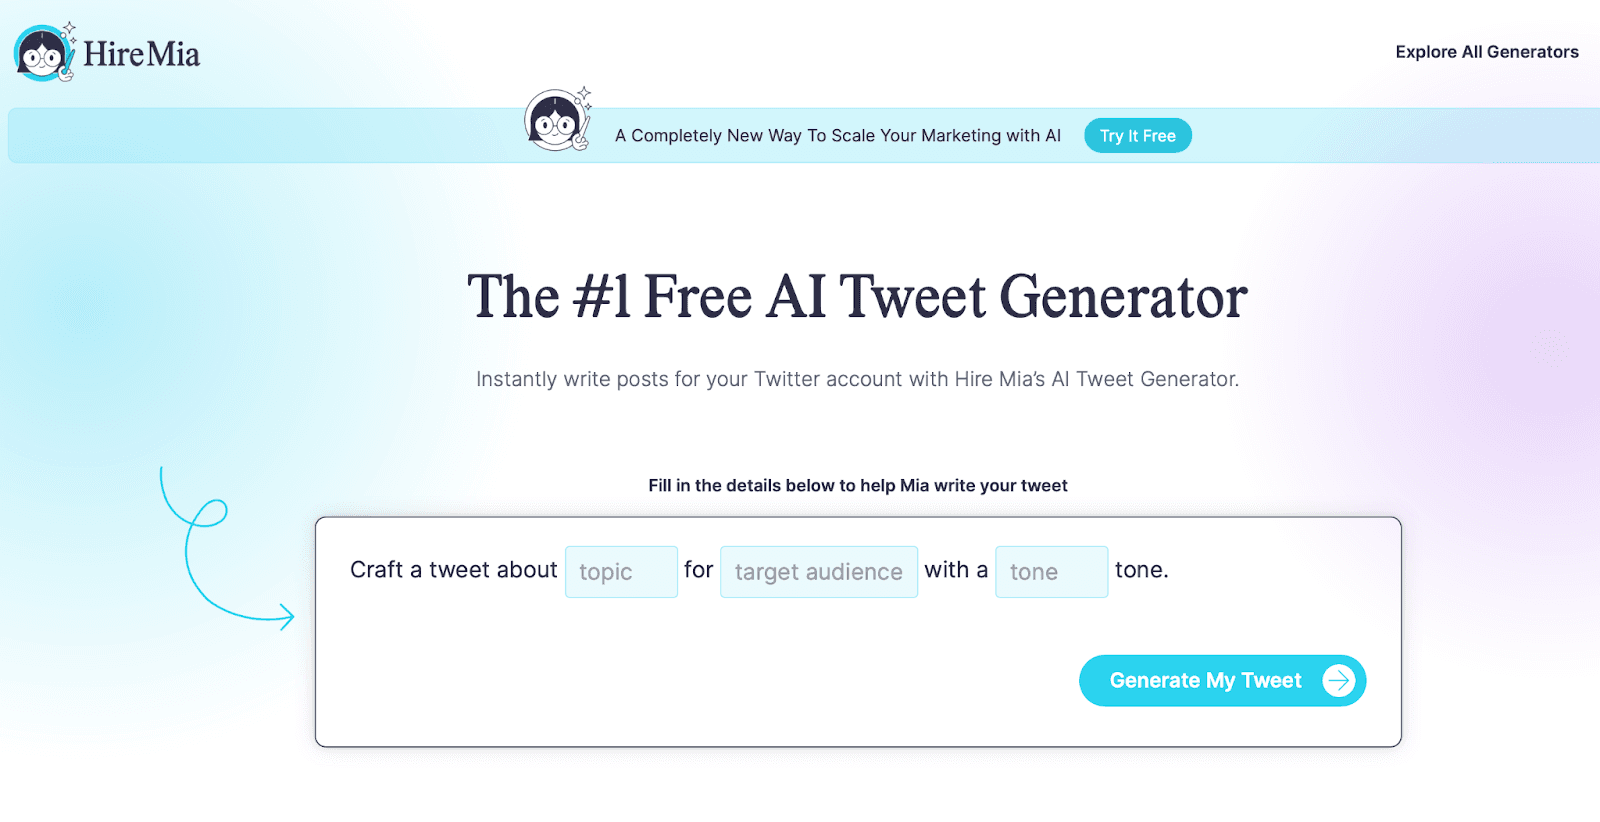 The #1 Free AI Tweet Generator from HireMia